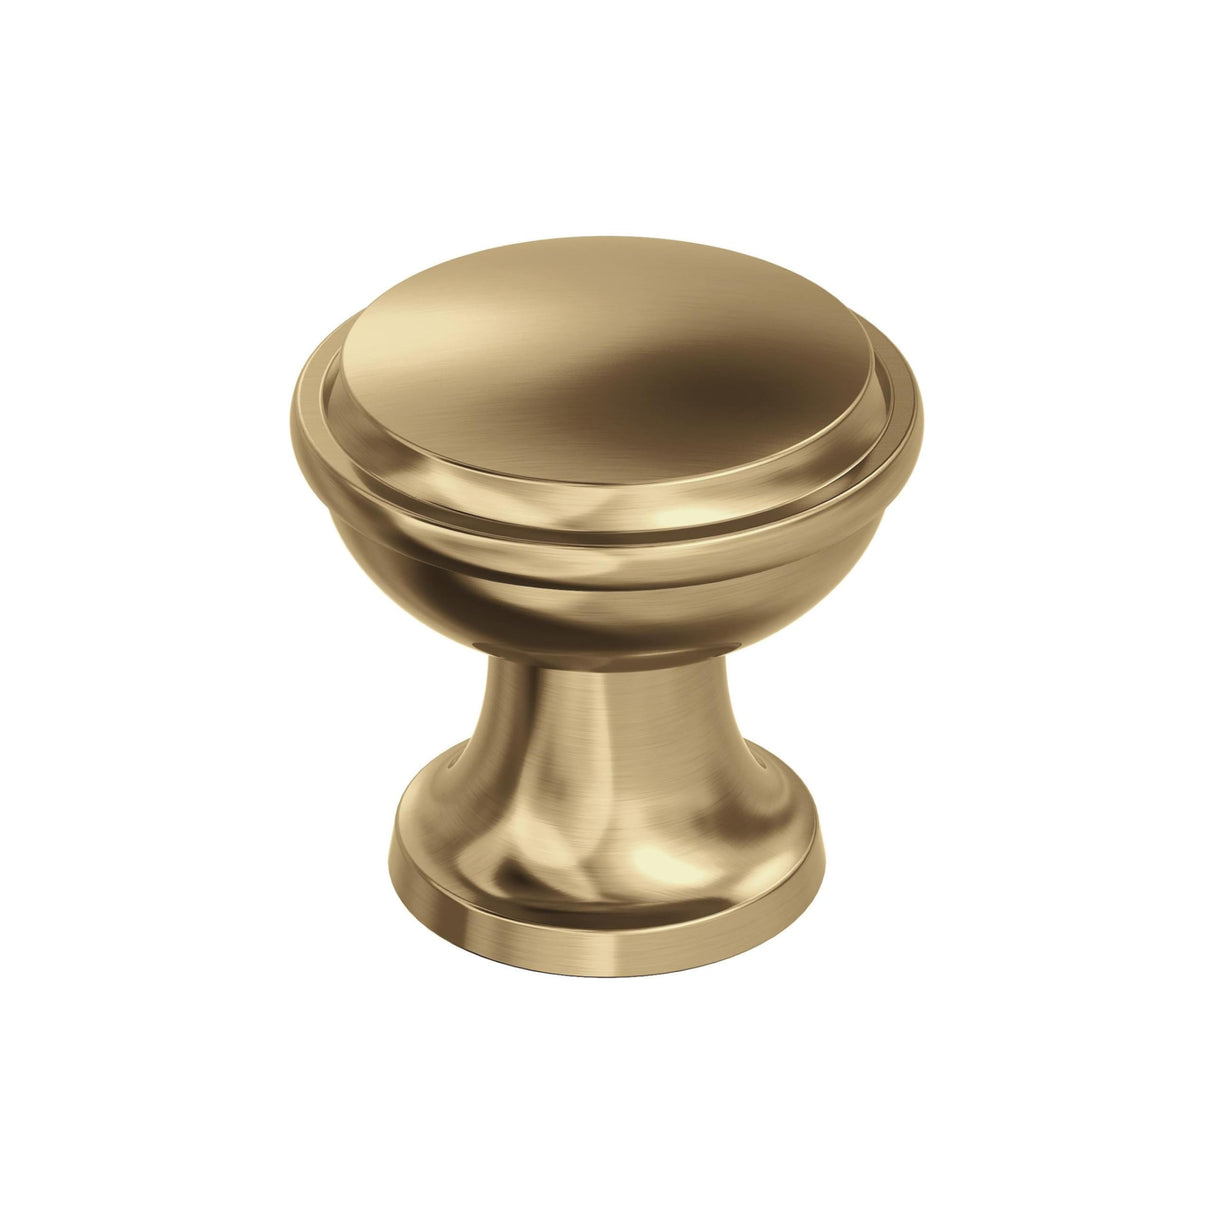 Amerock Cabinet Knob |Champagne Bronze 1-3/16 in (30 mm) Diameter Drawer Knob Westerly Kitchen and Bath Hardware Furniture Hardware